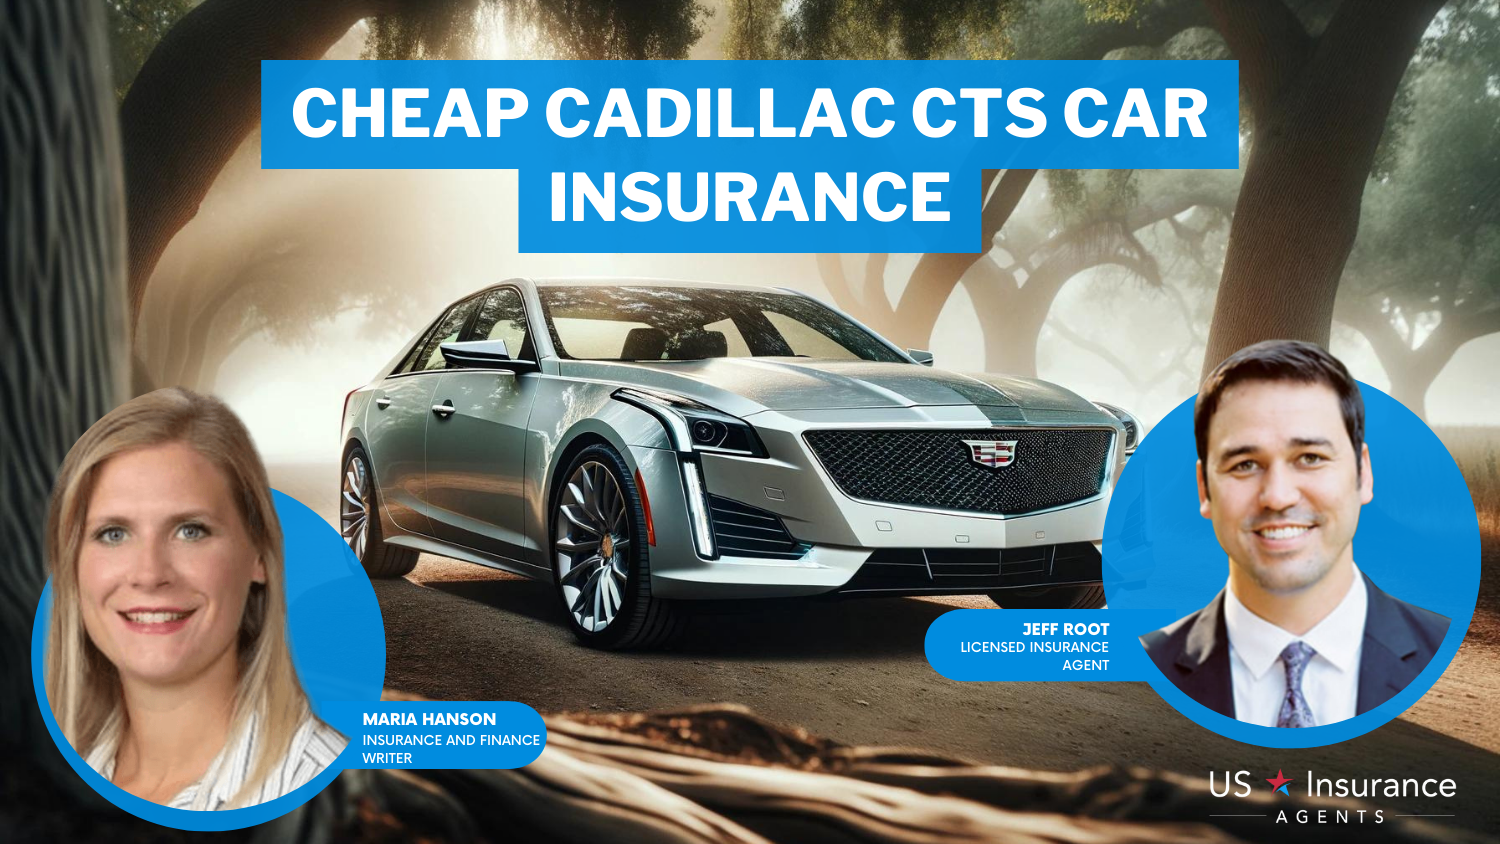 Cheap Cadillac Car Insurance: State Farm, Farmers, and Allstate